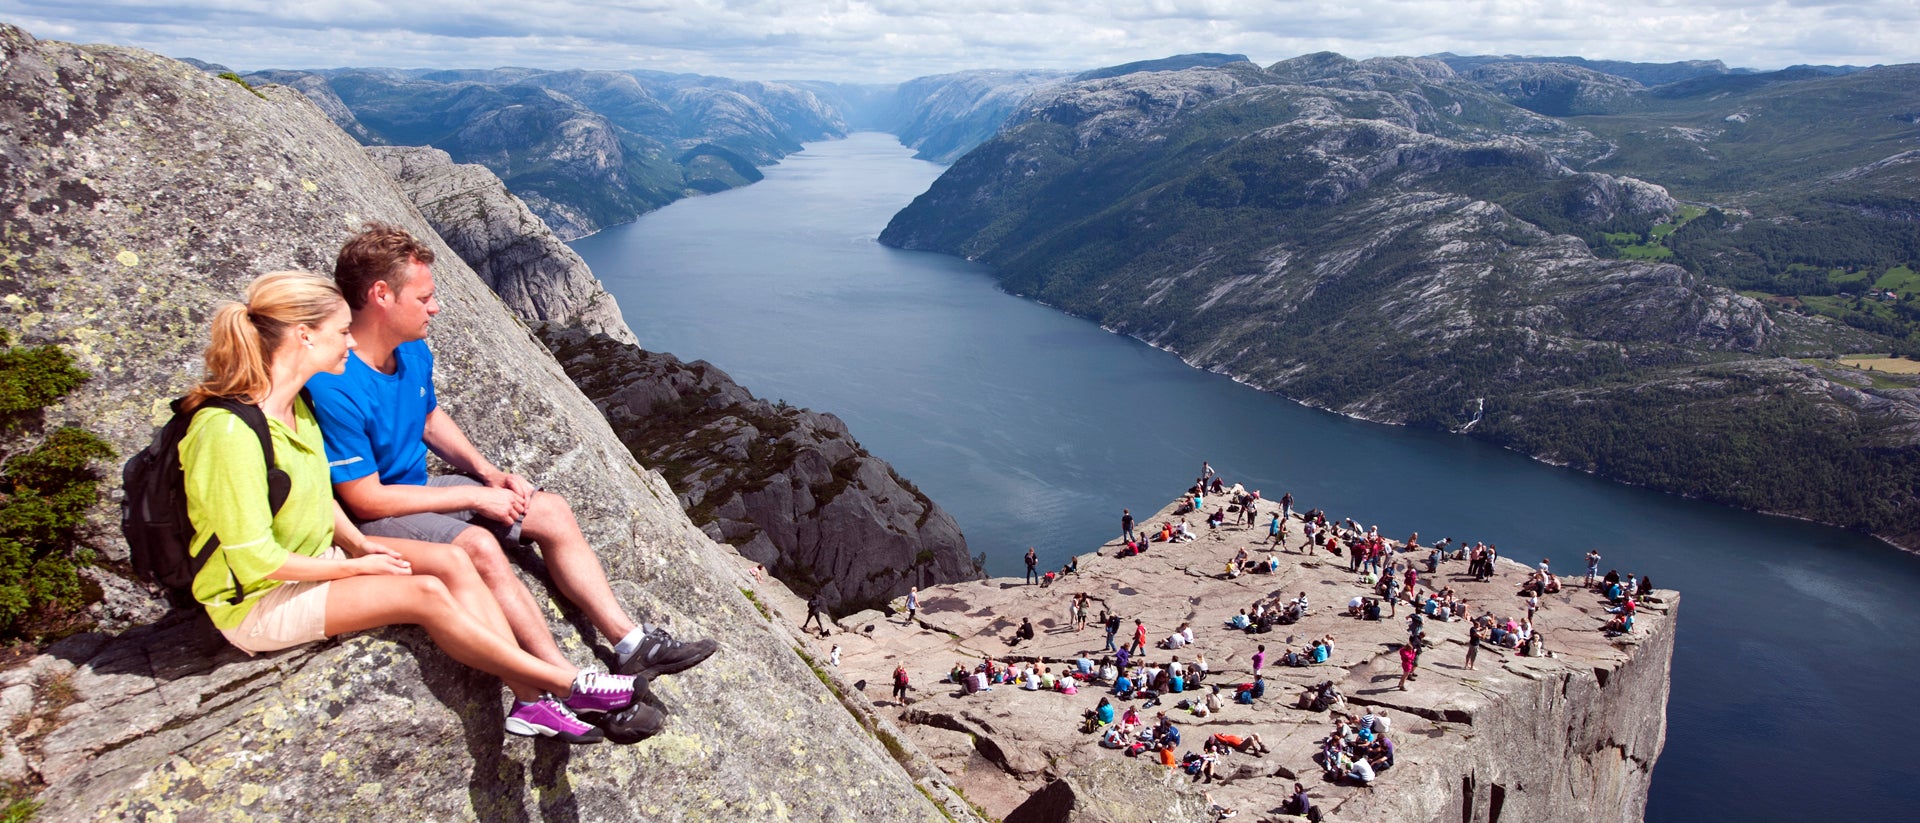 Paesaggio montano tra i fiordi norvegesi